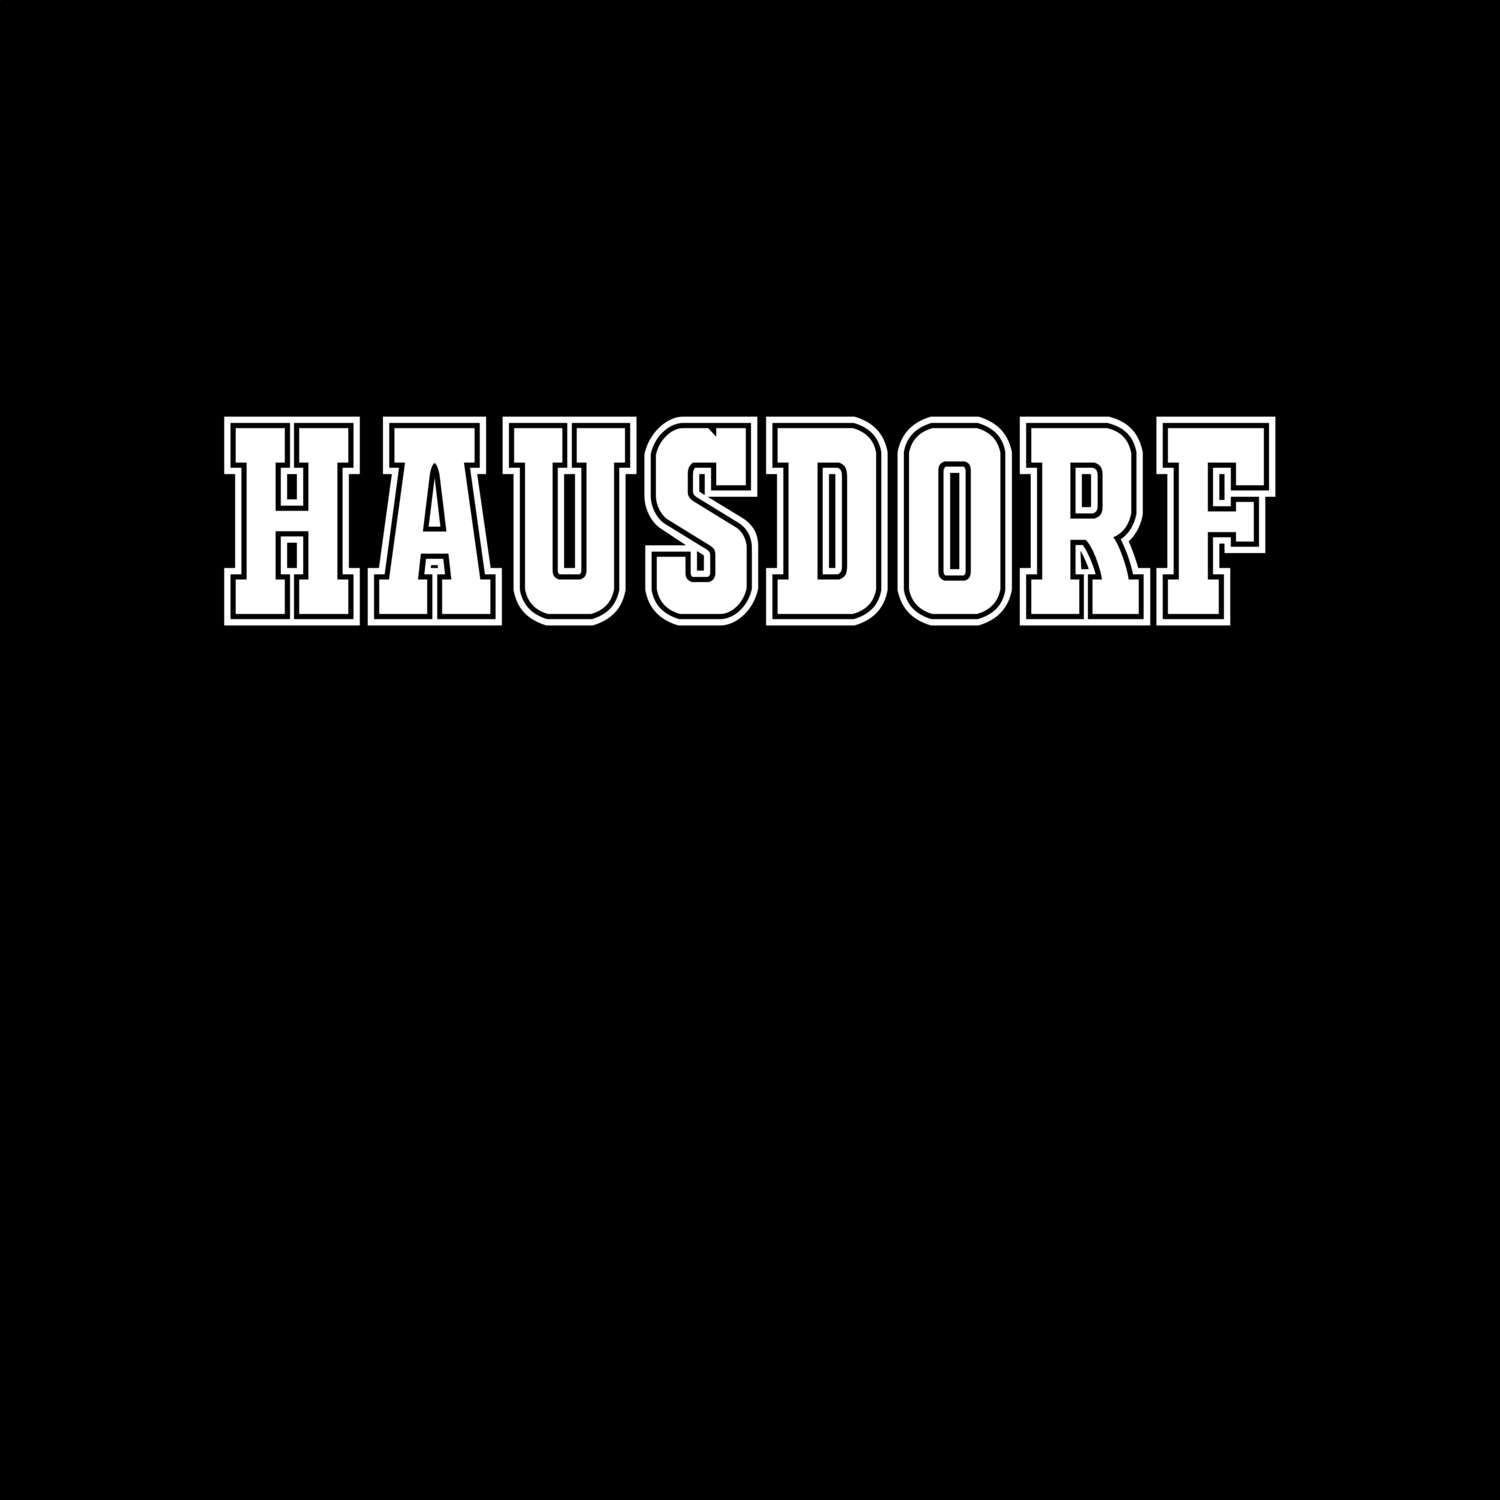 Hausdorf T-Shirt »Classic«